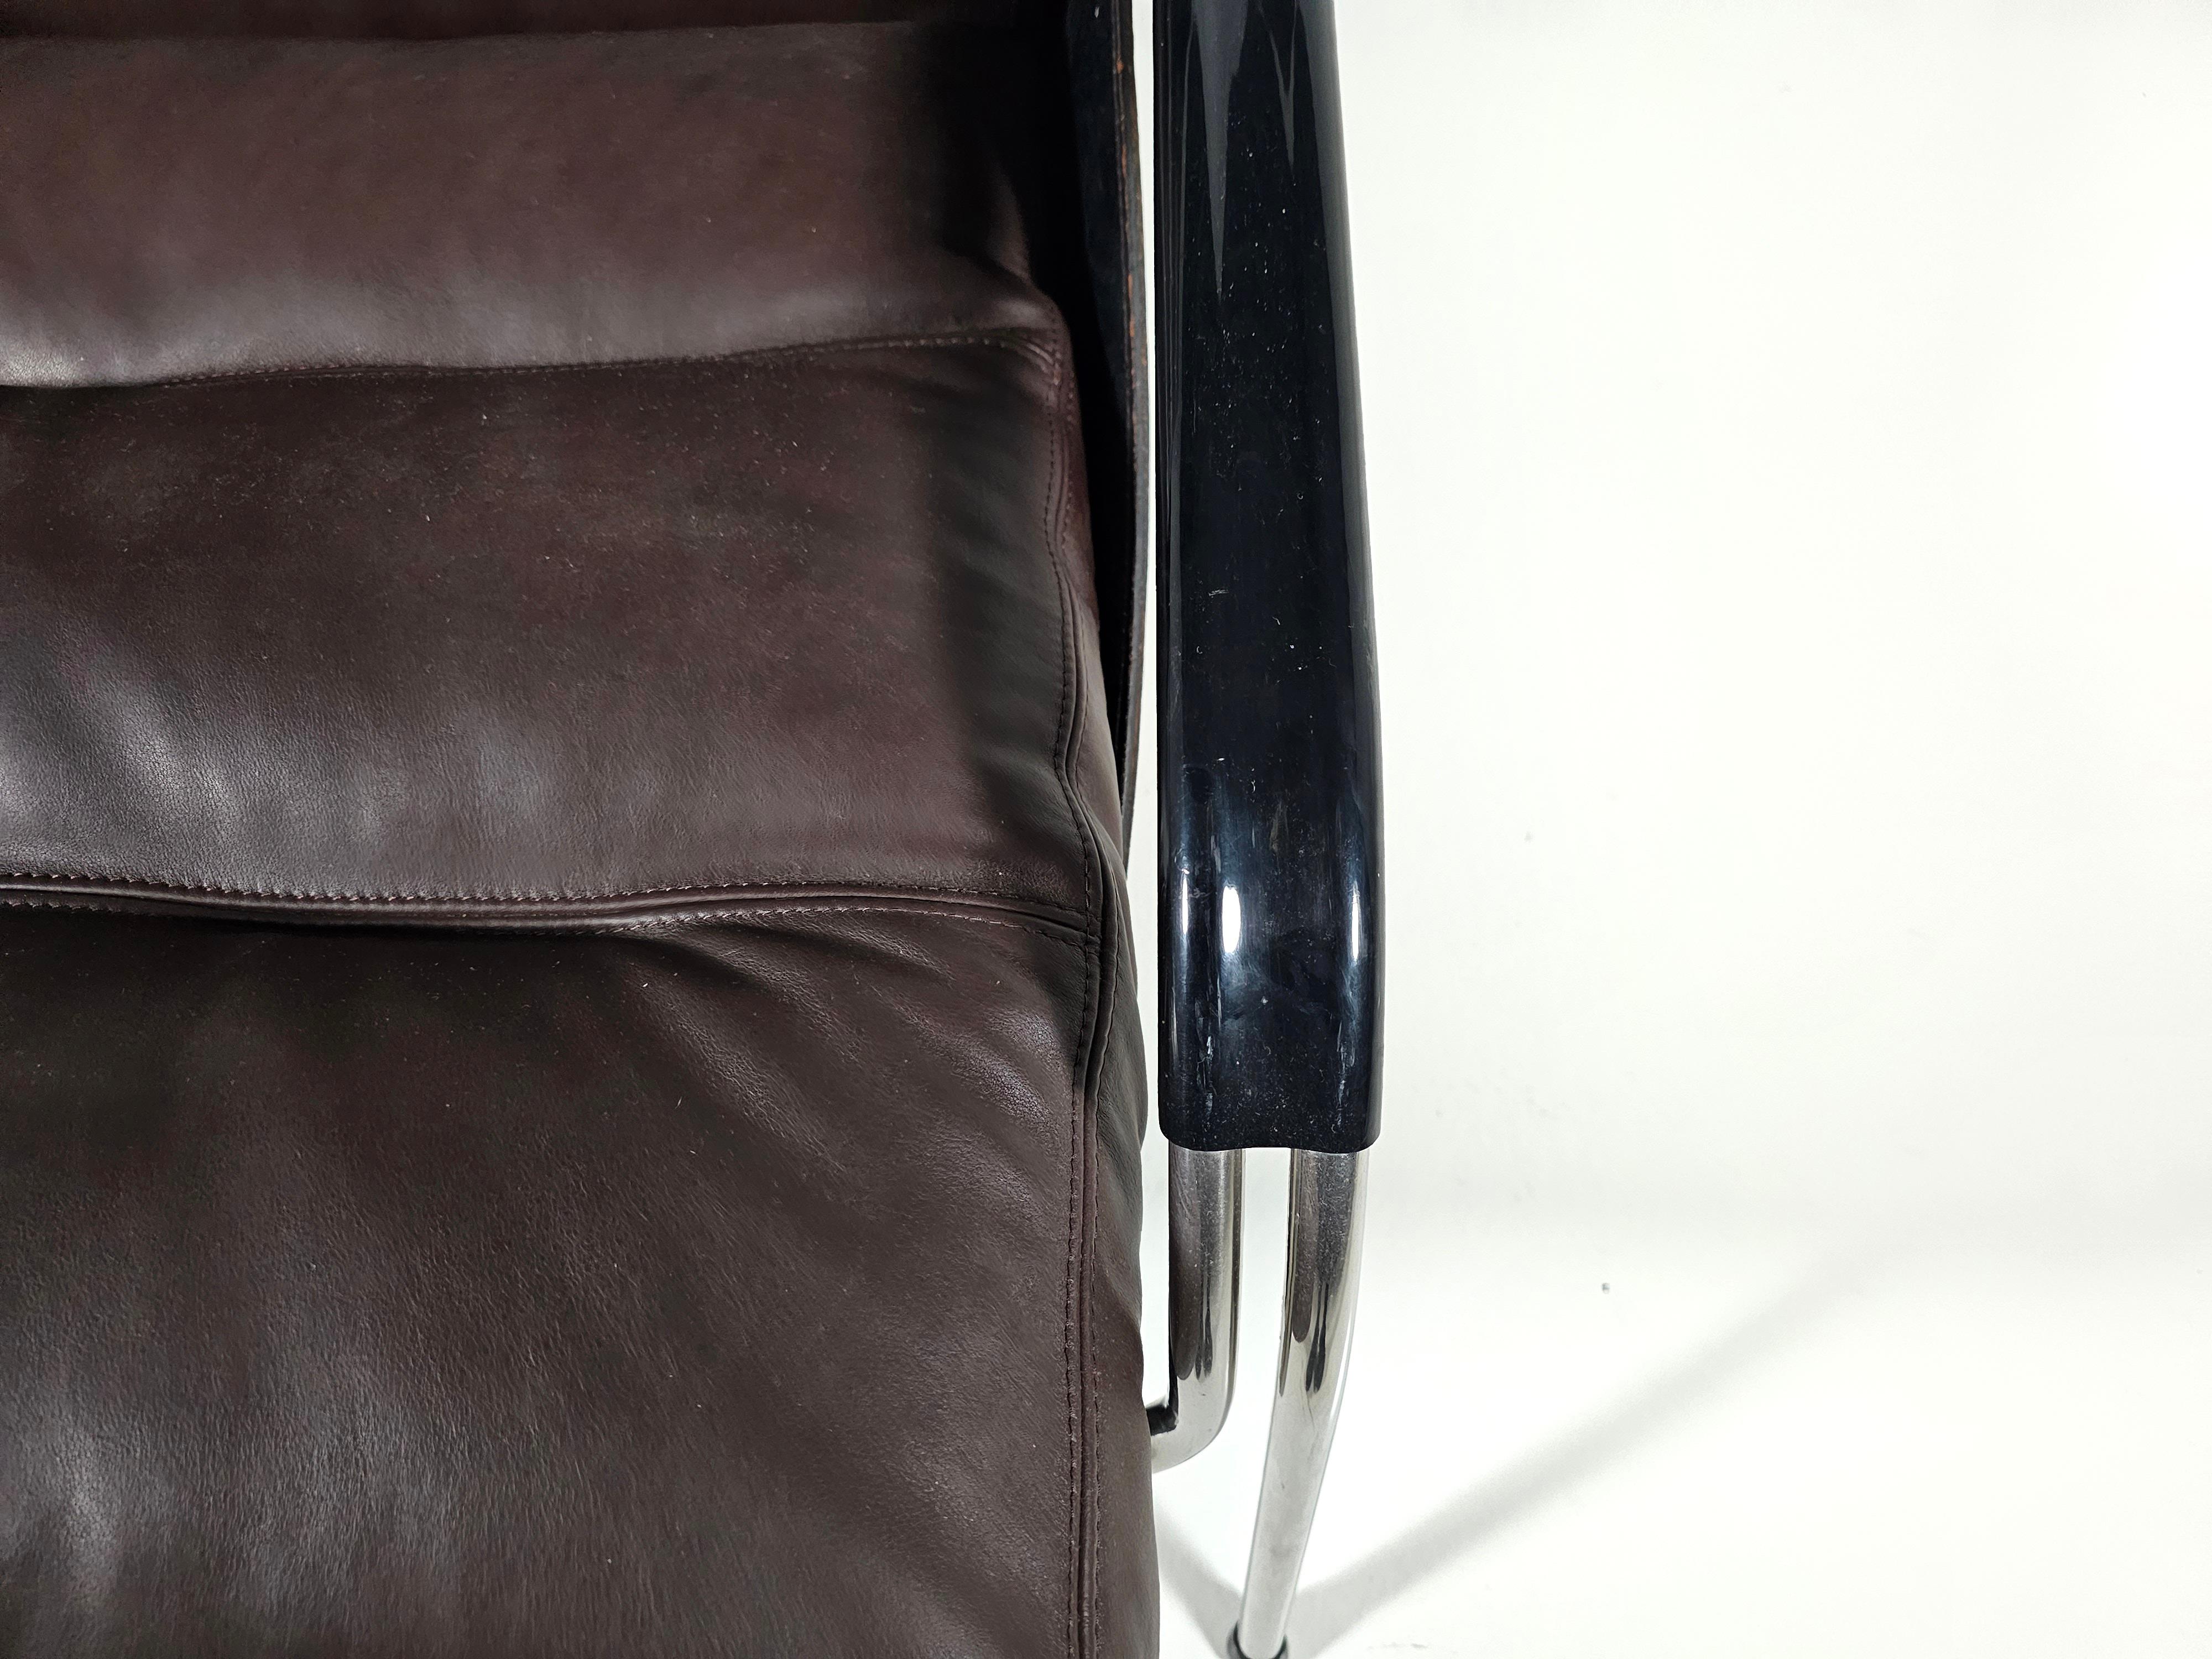  Marco Zanuso Maggiolina lounge chairs in brown and black leather, Zanotta, 1950 For Sale 5